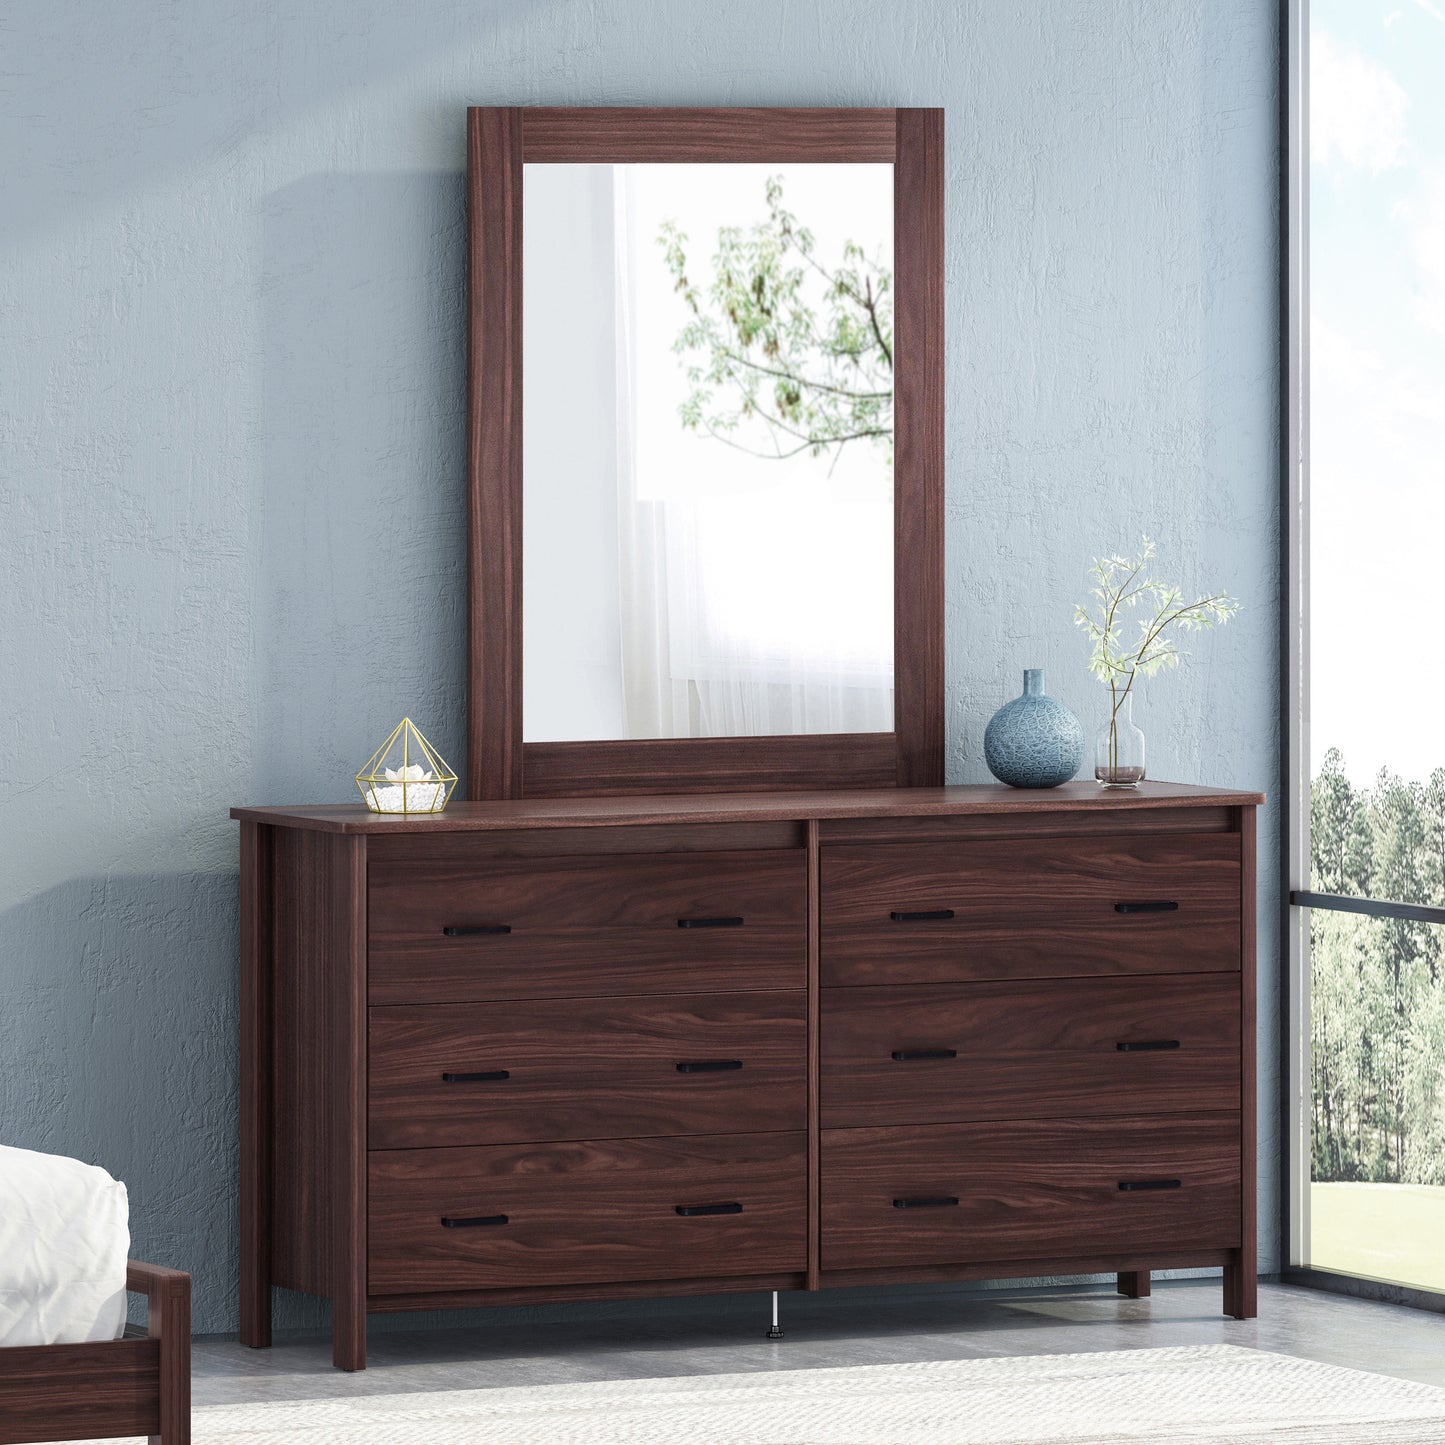 Titeca Contemporary 6 Drawer Vanity Dresser with Rectangular Mirror